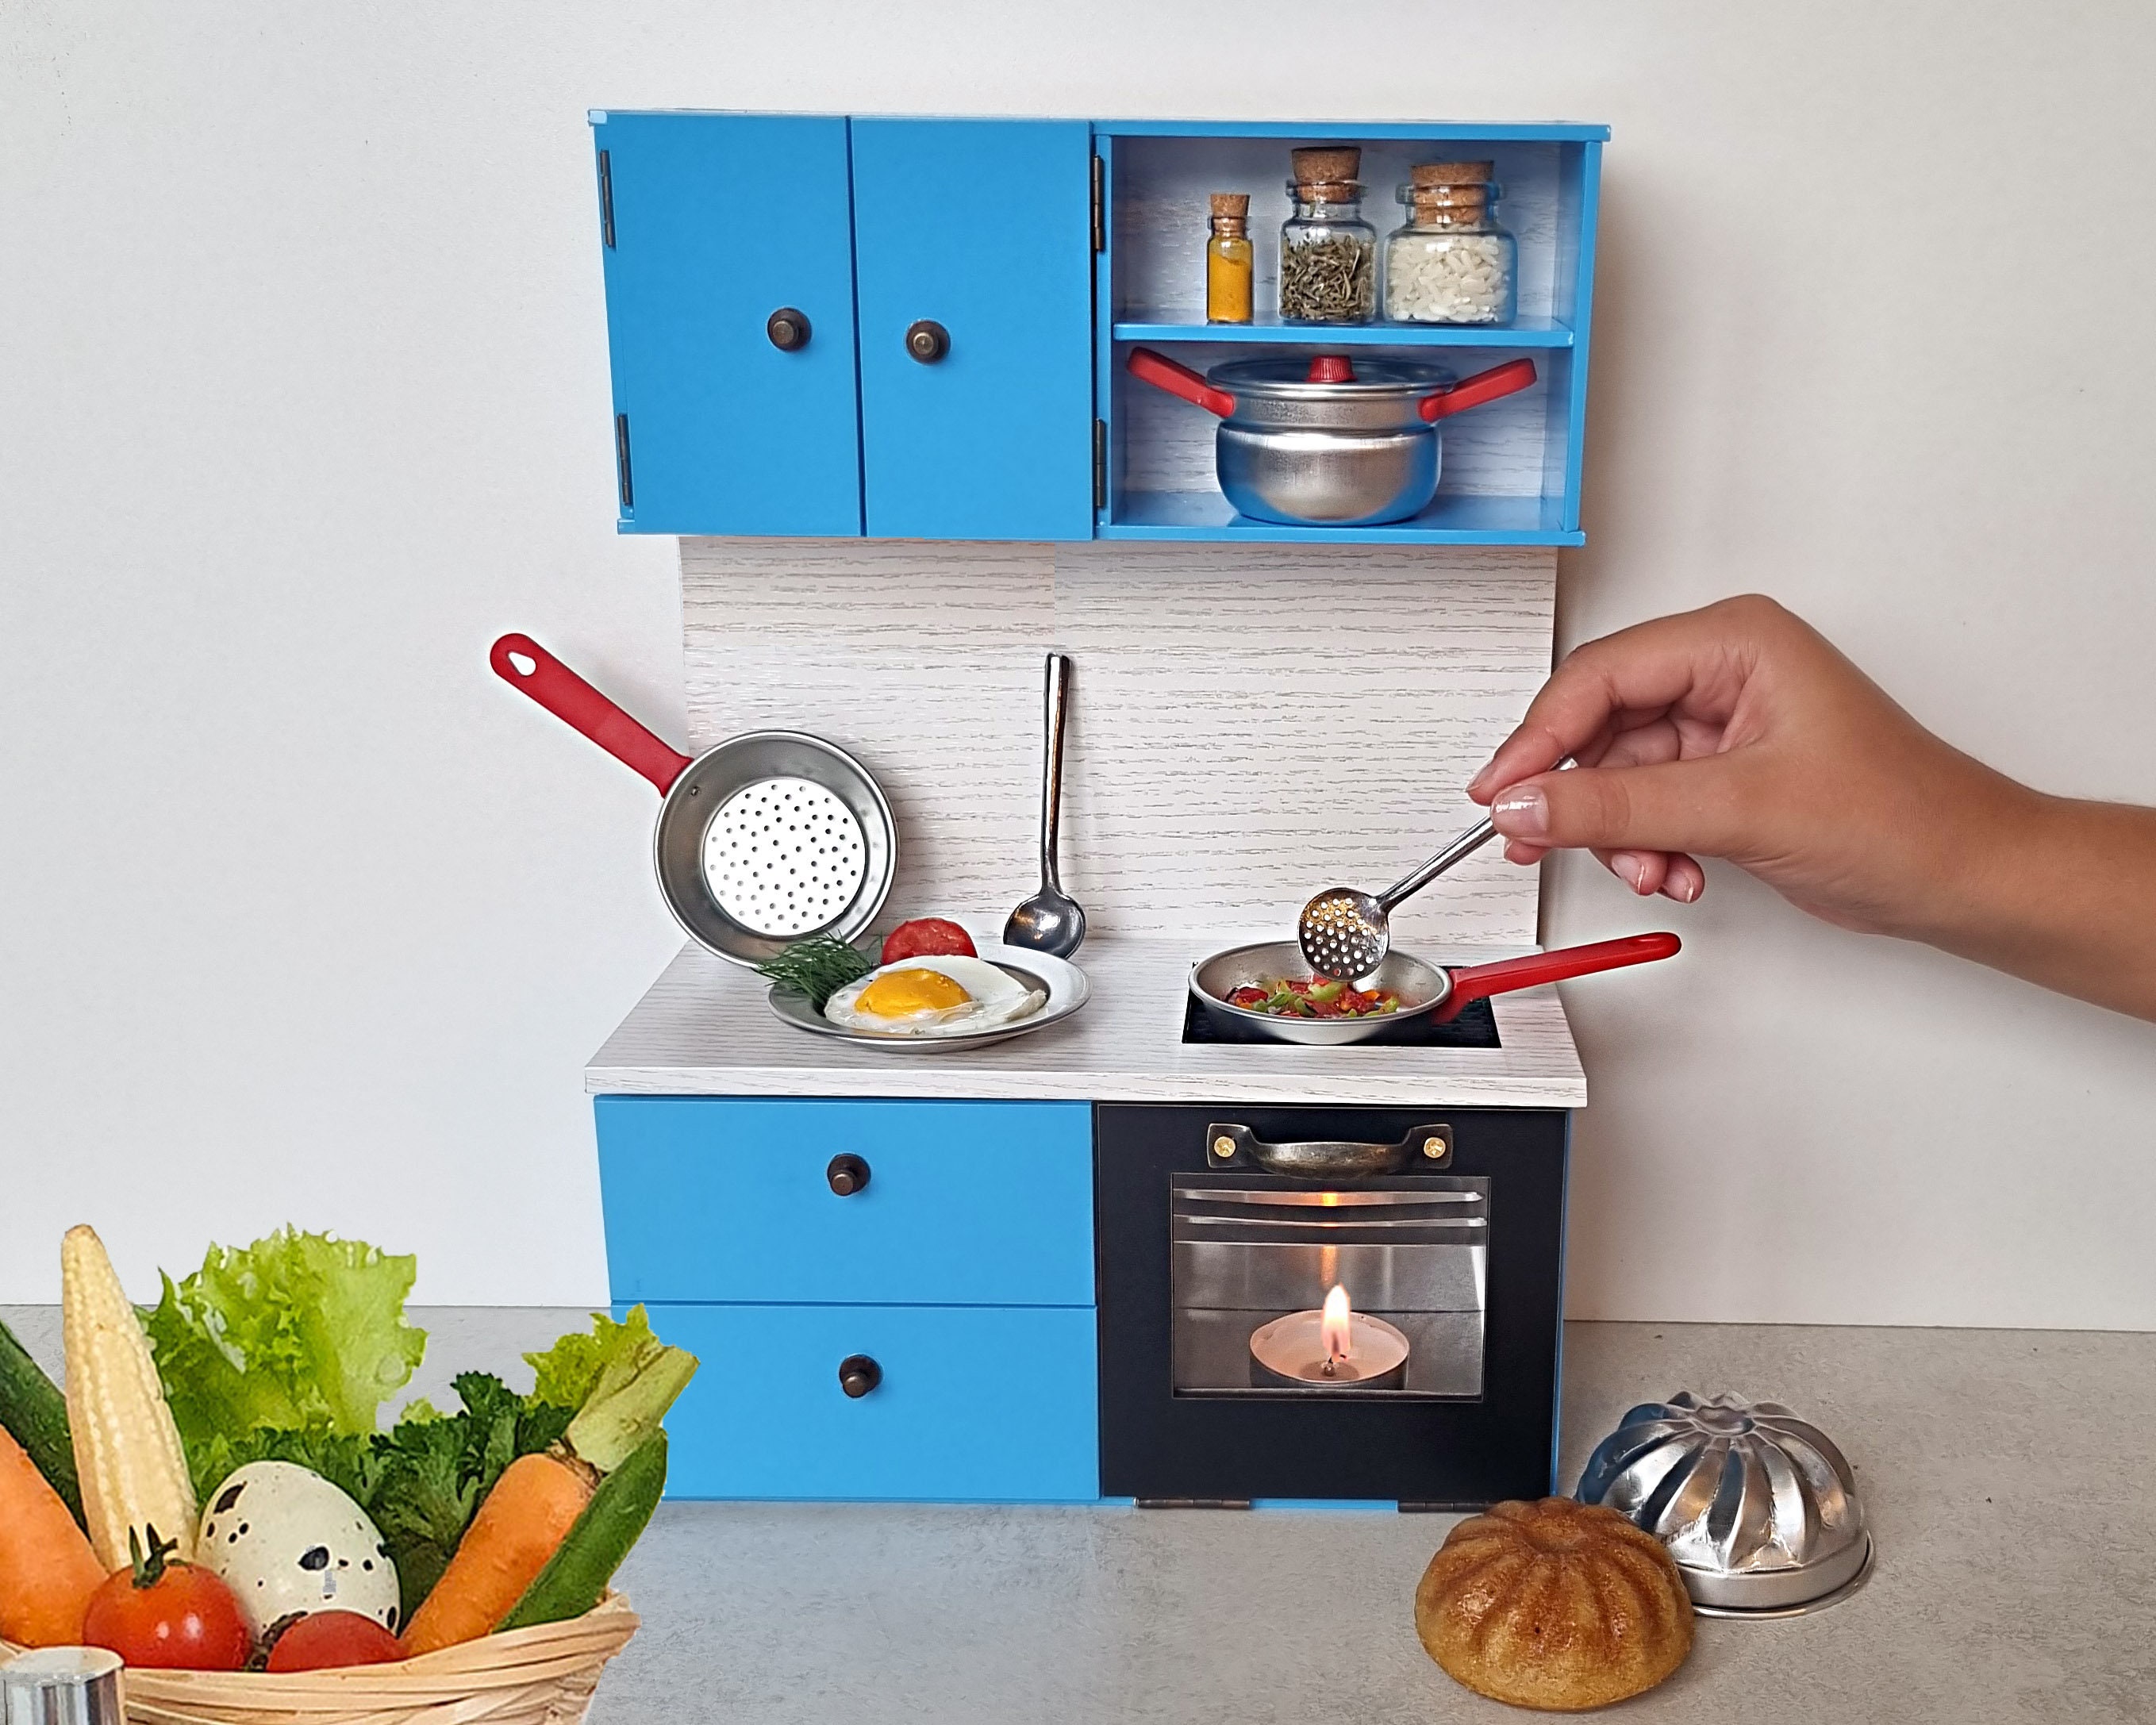 Miniature Cooking Aluminium foil, Food Bag, Non-Stick Baking Paper Set –  Real Mini World